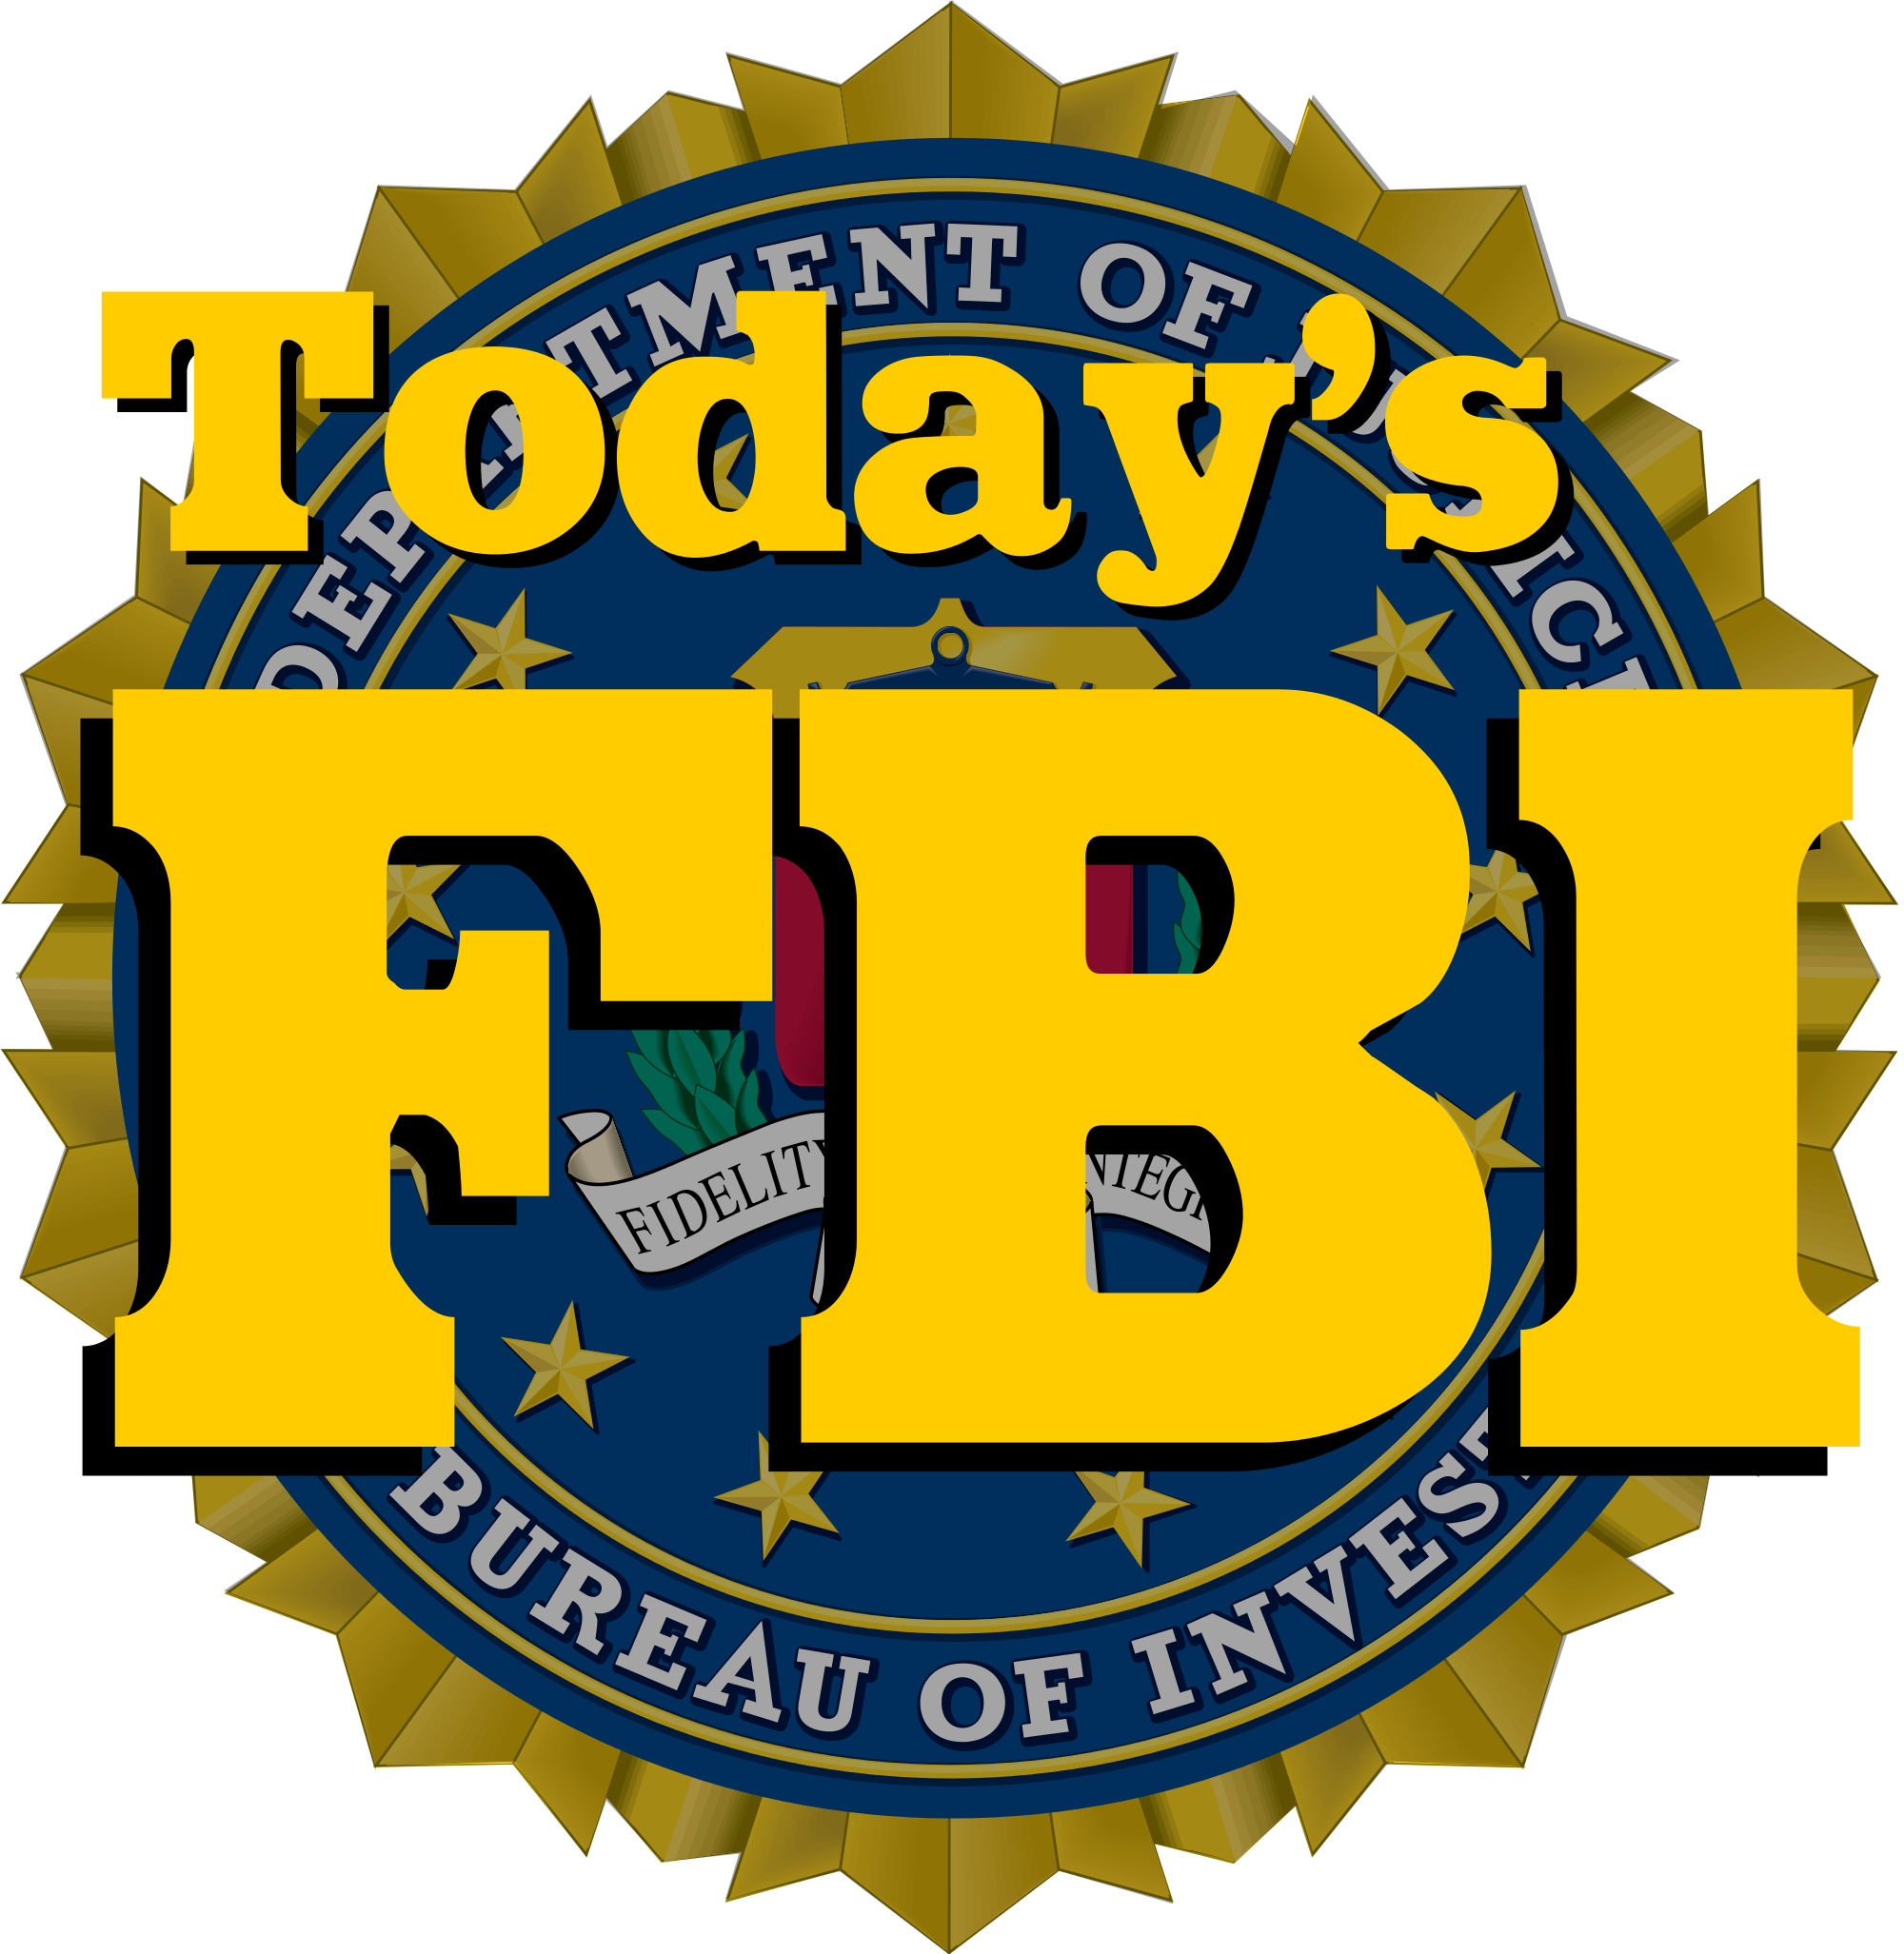 Anti Trump Fbi Agent Peter Strzok Wrote Text Message - Federal Bureau Of Investigation (2000x2053)